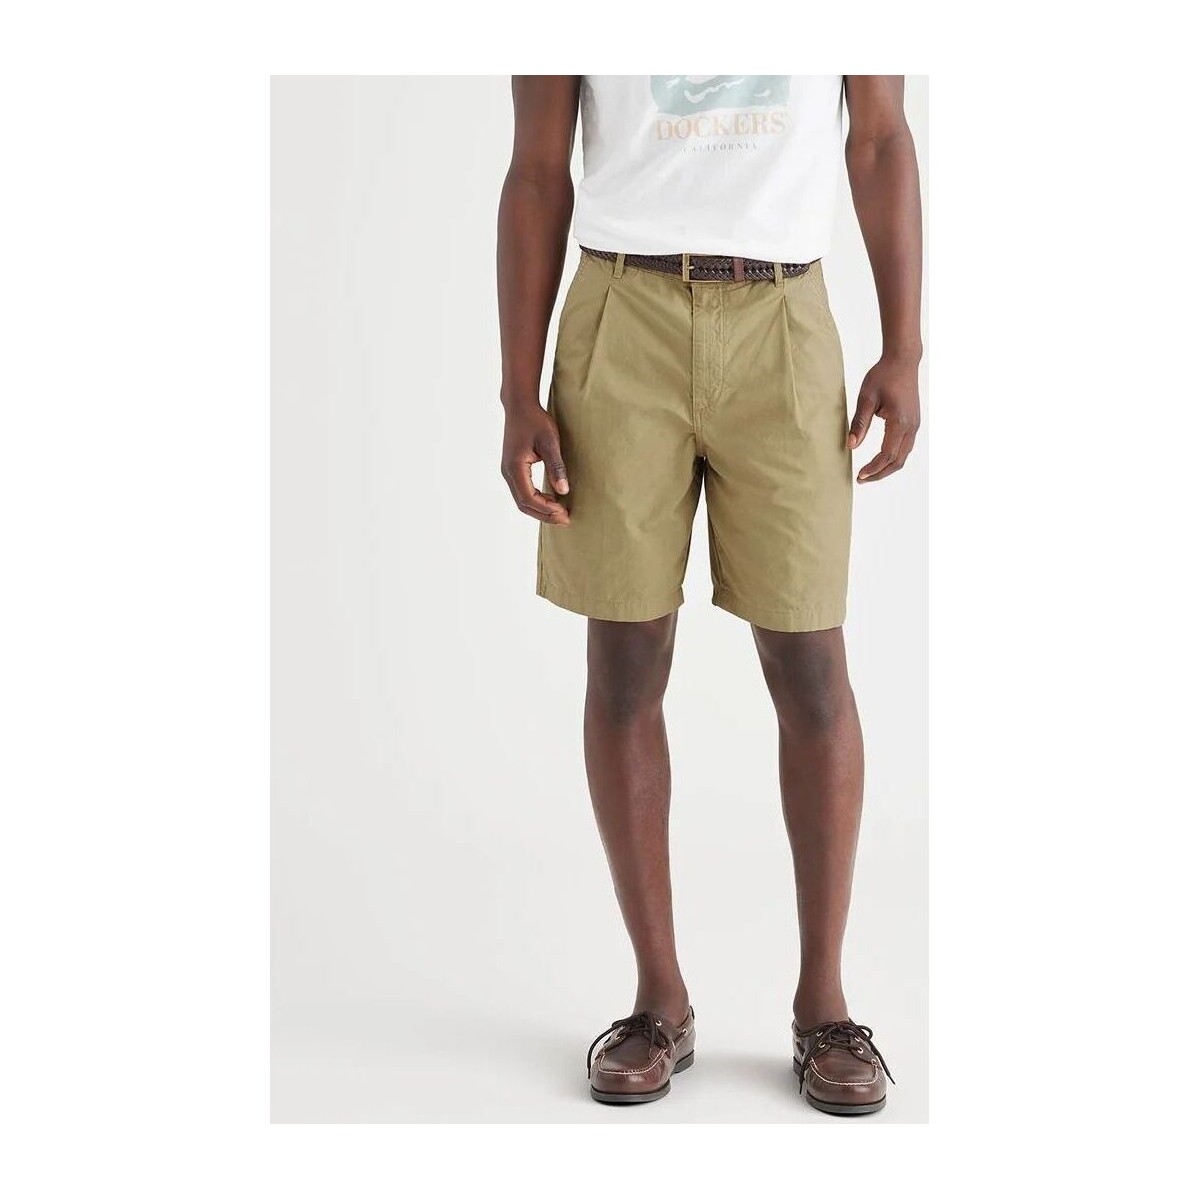 Vêtements Homme Shorts / Bermudas Dockers A7546 0001 OROGINAL PLEATED-0000 HARVEST GOLD Beige